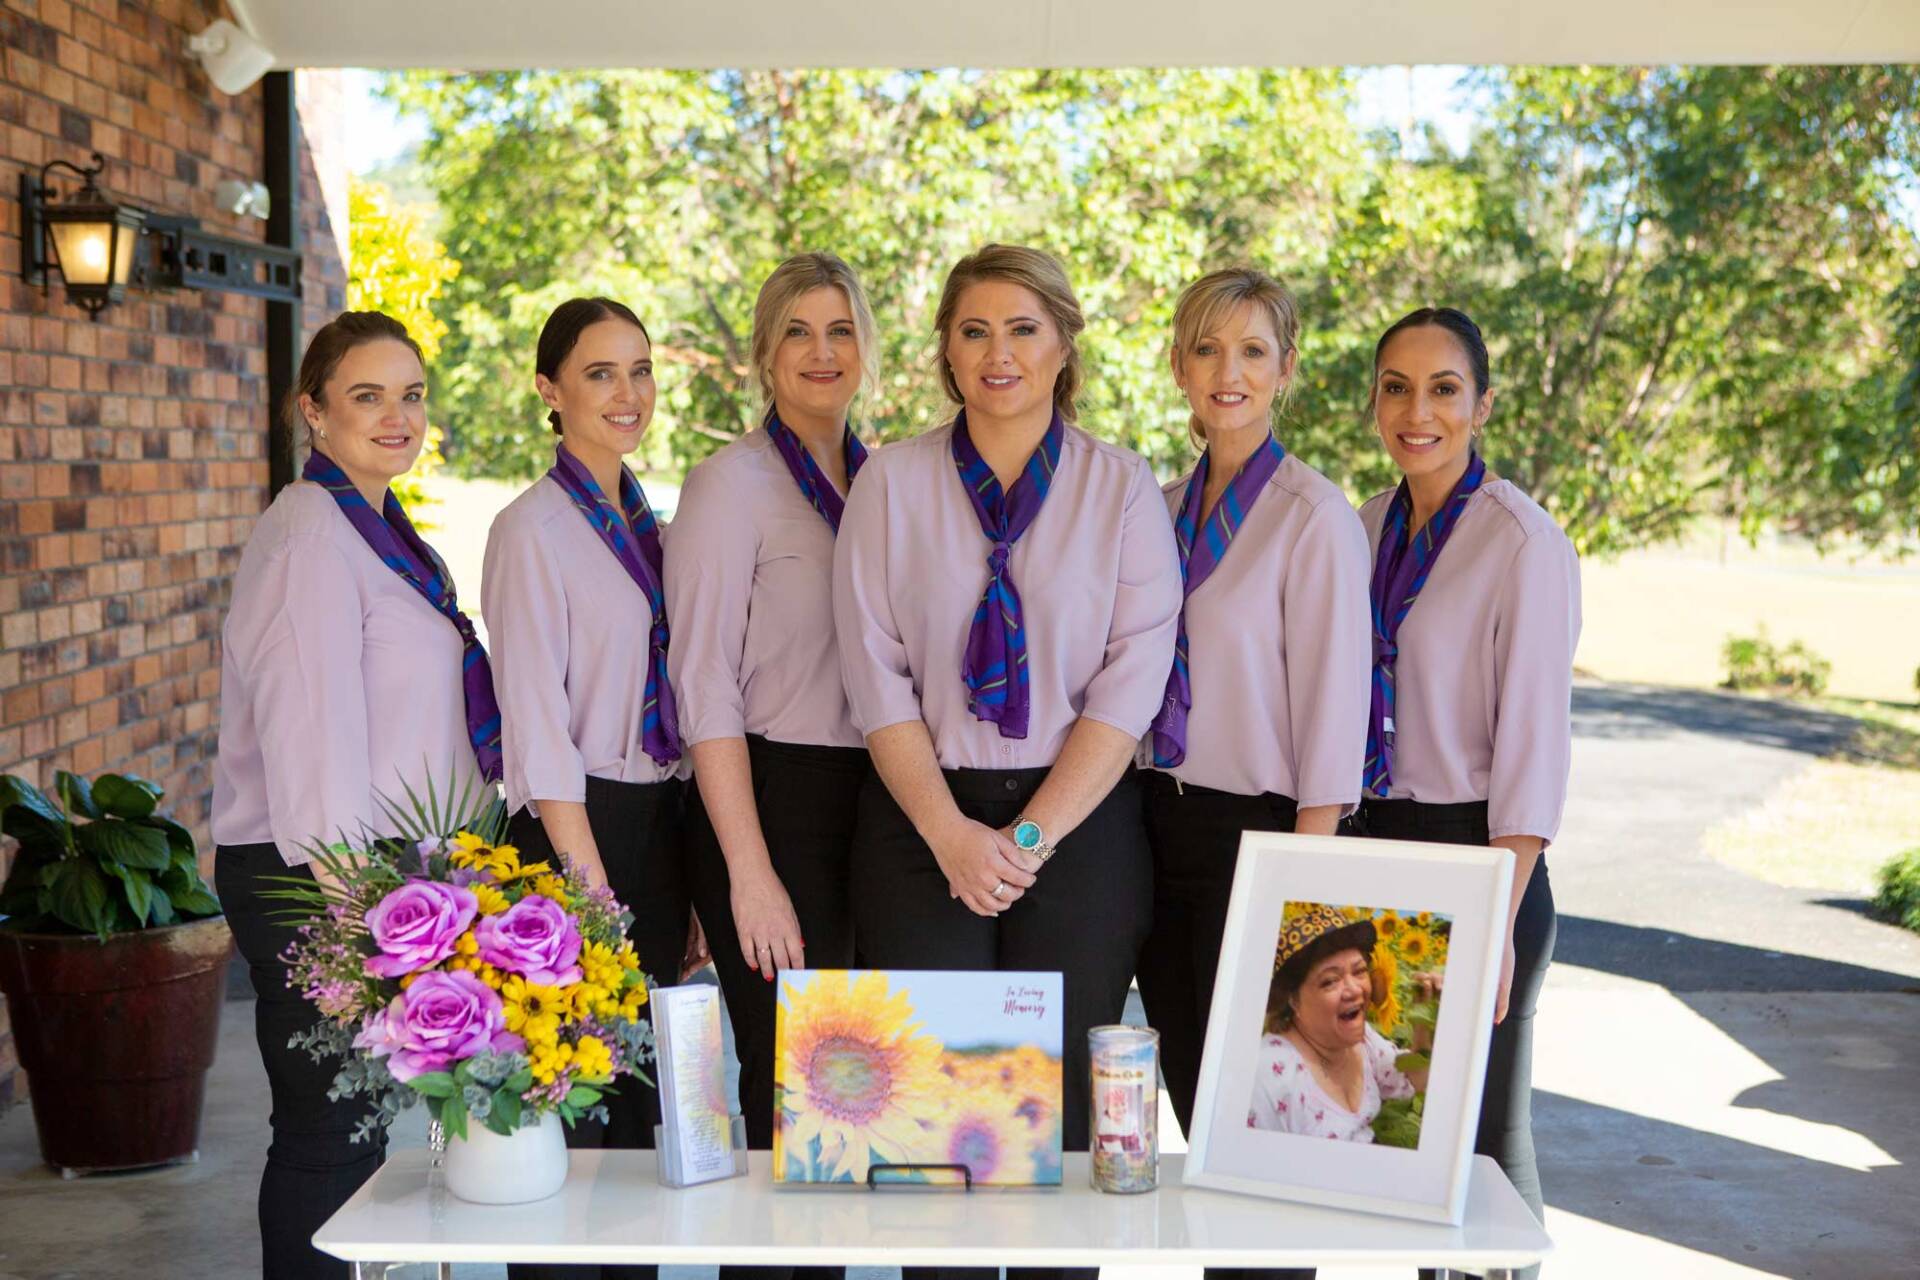 Team Picture In Lavender Uniform | Coffs Harbour, NSW | Lavender Rose Funerals